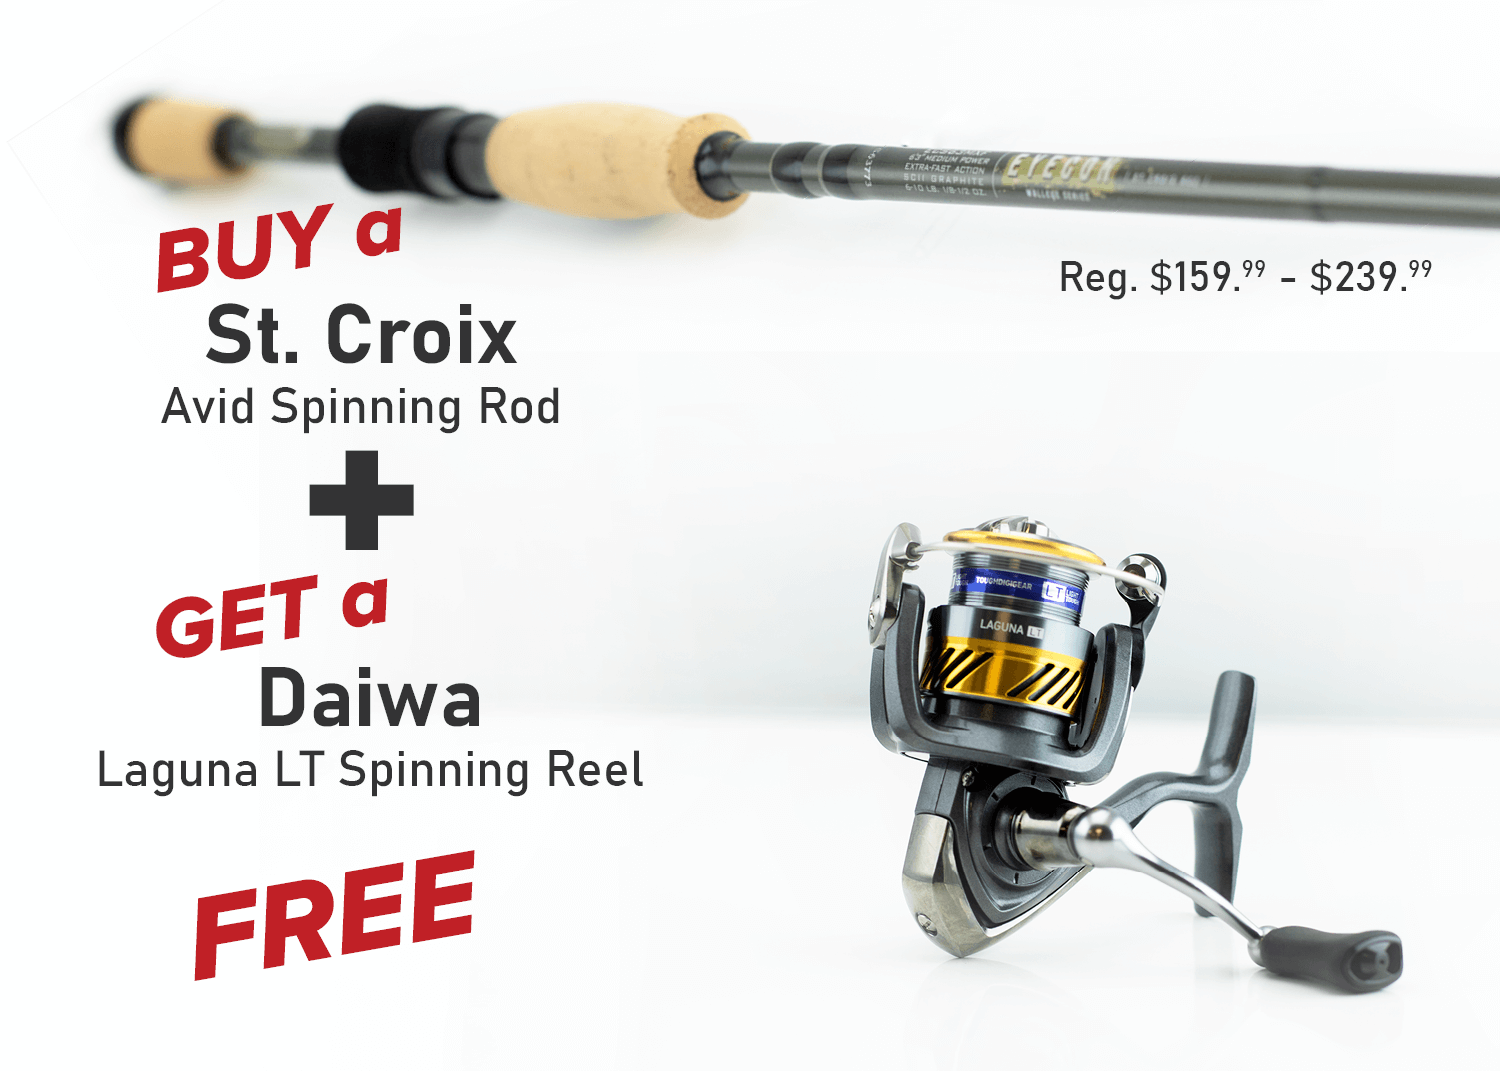 Buy a St. Croix Avid Spinning Rod & Get a FREE Daiwa Laguna LT Spinning Reel